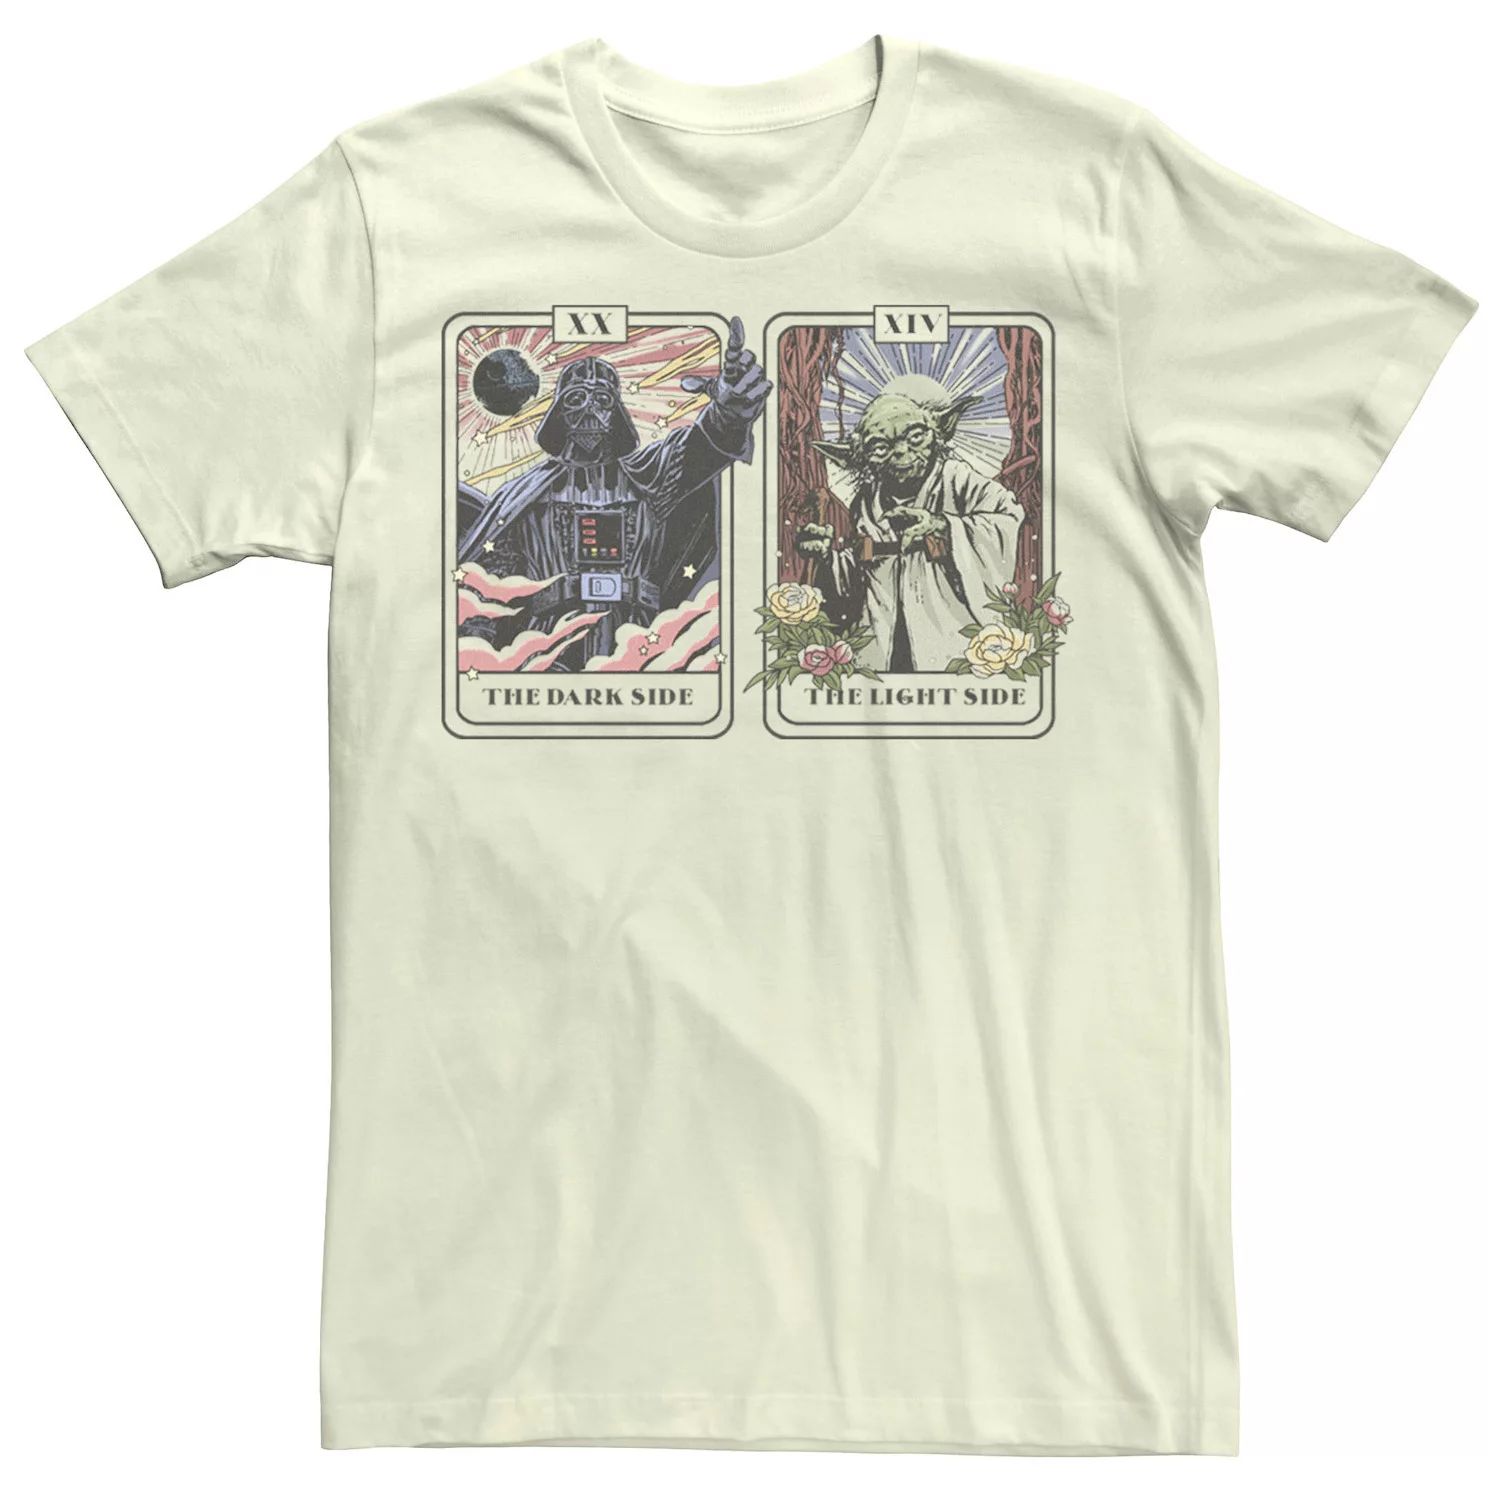 Мужская футболка с картами Таро Вейдера и Йоды Star Wars мужская футболка с картами таро сокол тысячелетия star wars